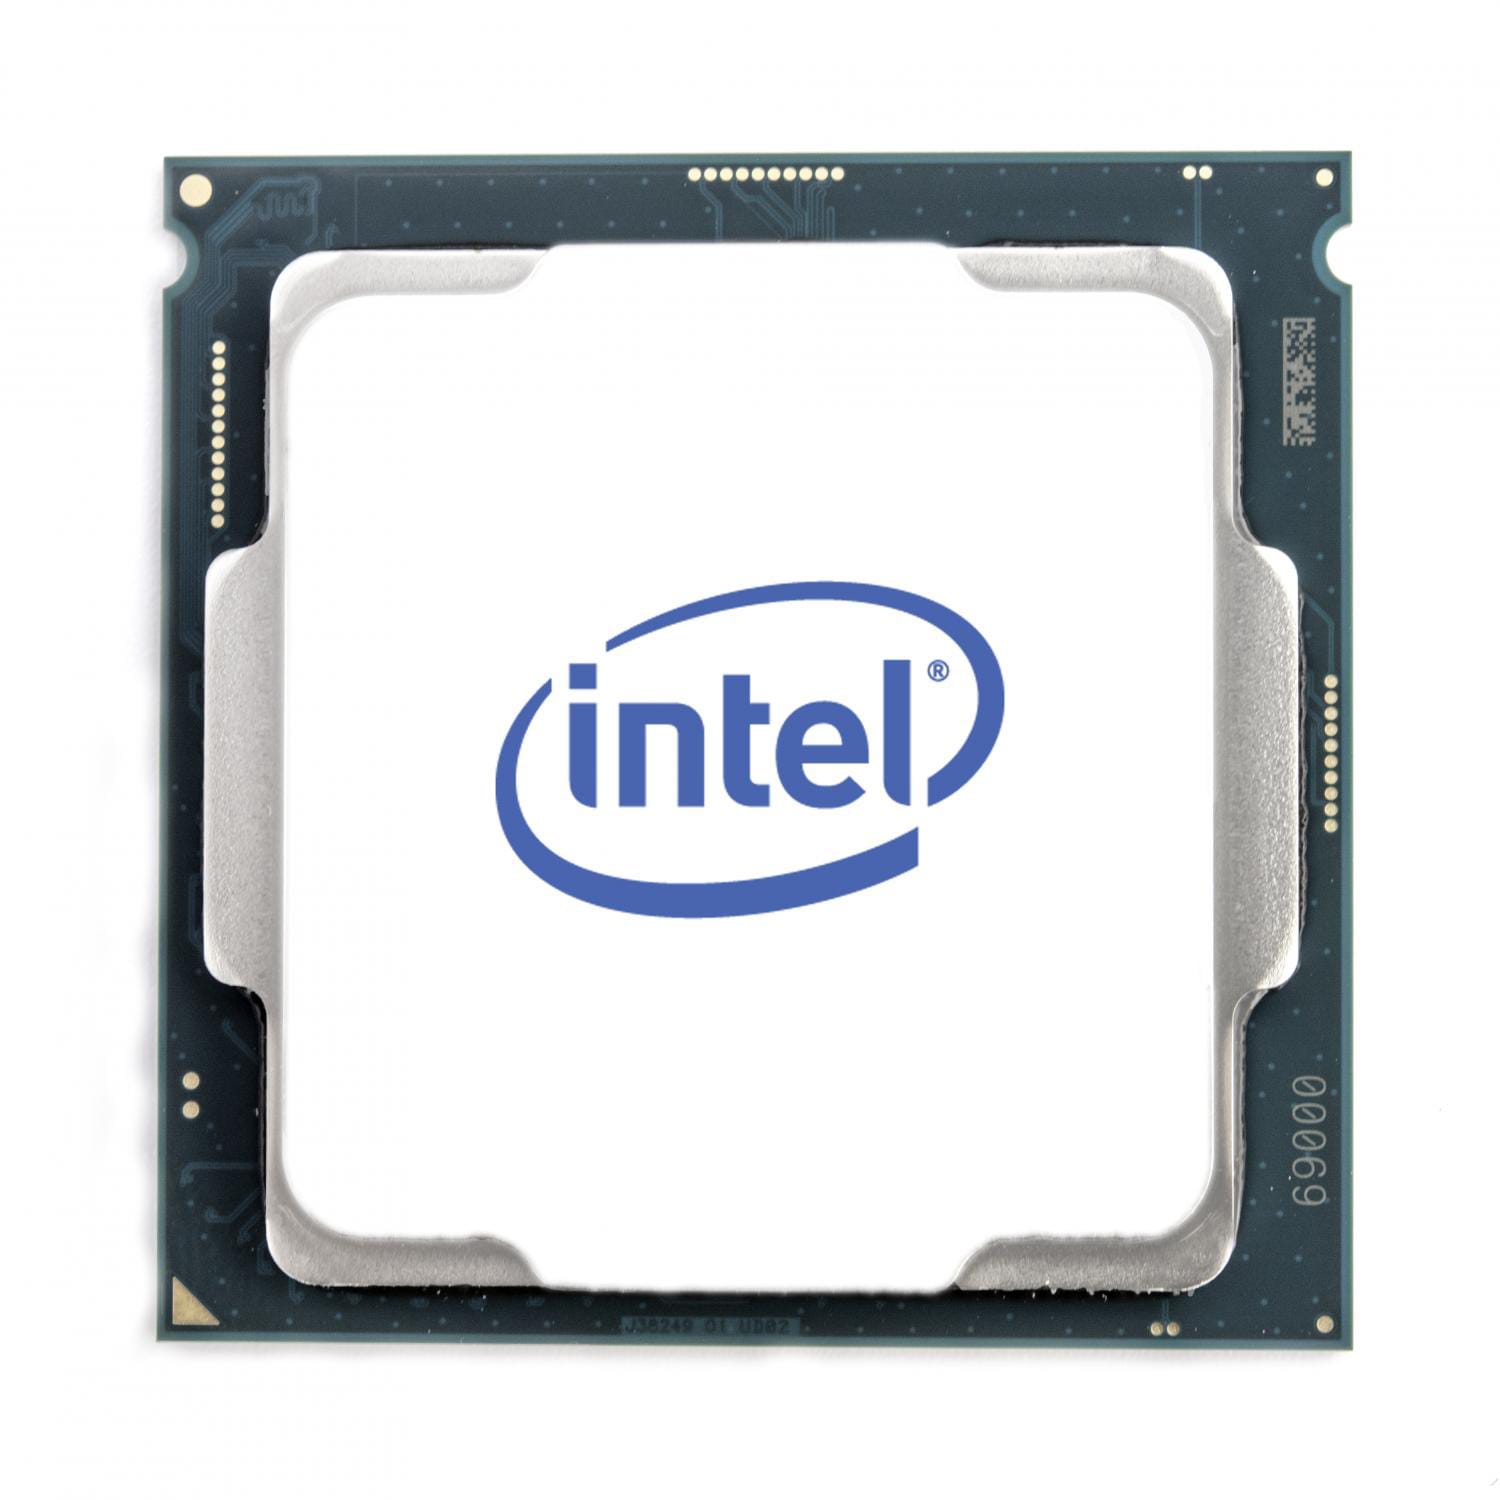 Intel Bx8070110400f I5-10400f 2.90 Ghz 10 Gen Comet Lake Socket 1200 Novga 12scheda Madre Box - Bx8070110400f